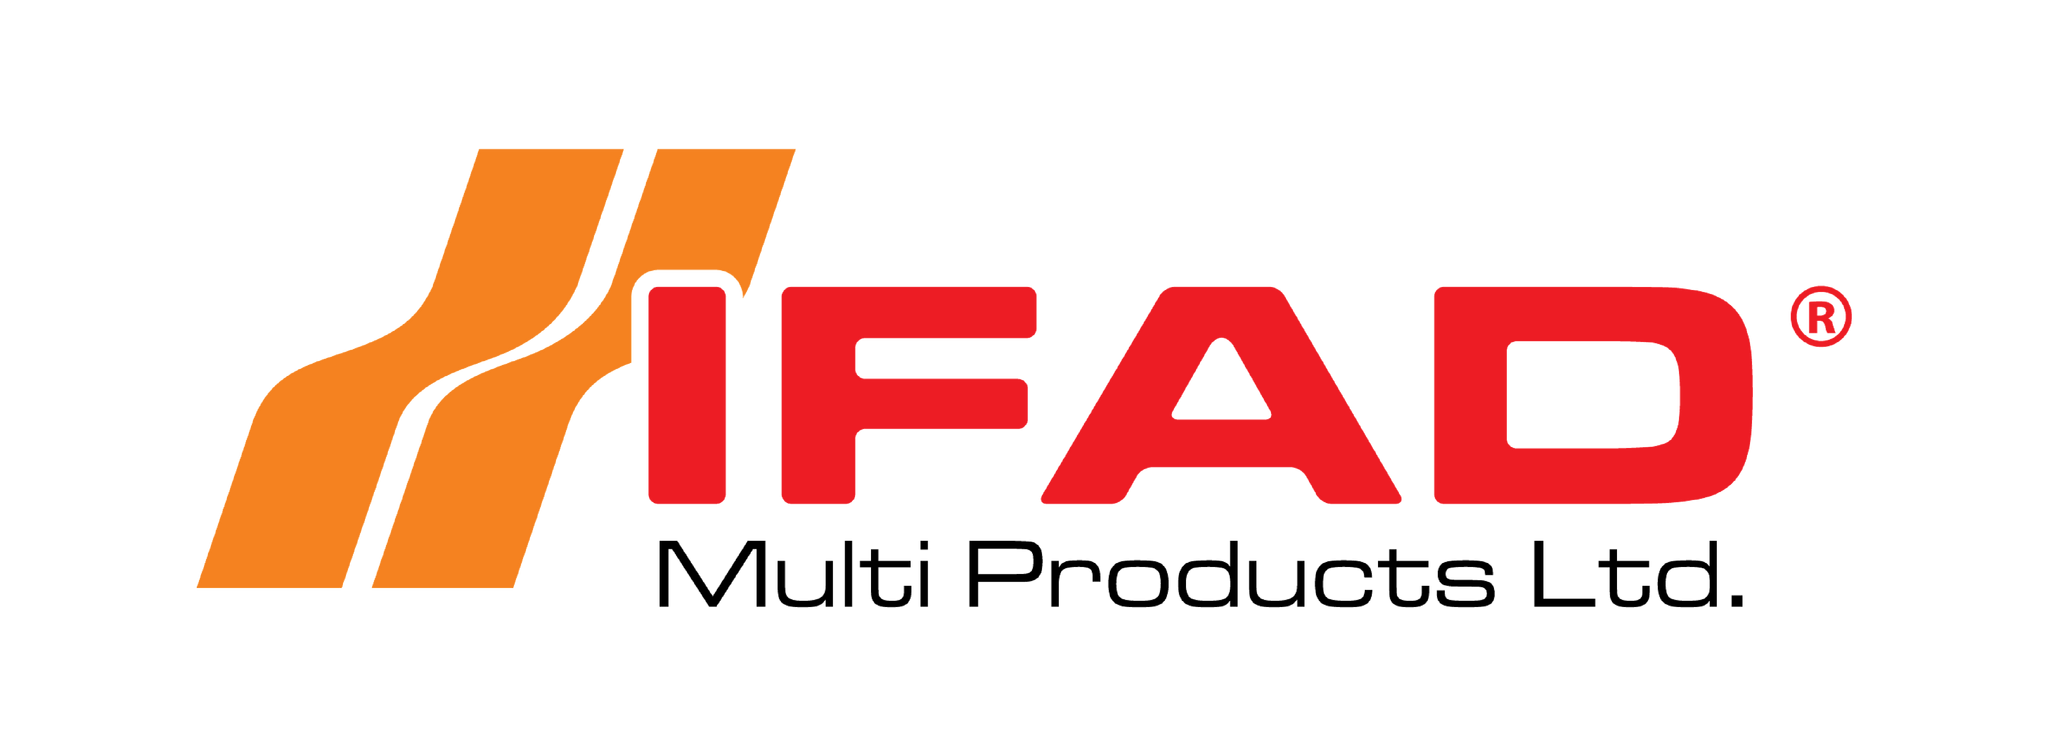 Enterprises limited enterprises limited. IFAD. Aarya Enterprises Limited логотип. Millman Limited логотип. IFAD vector logo.